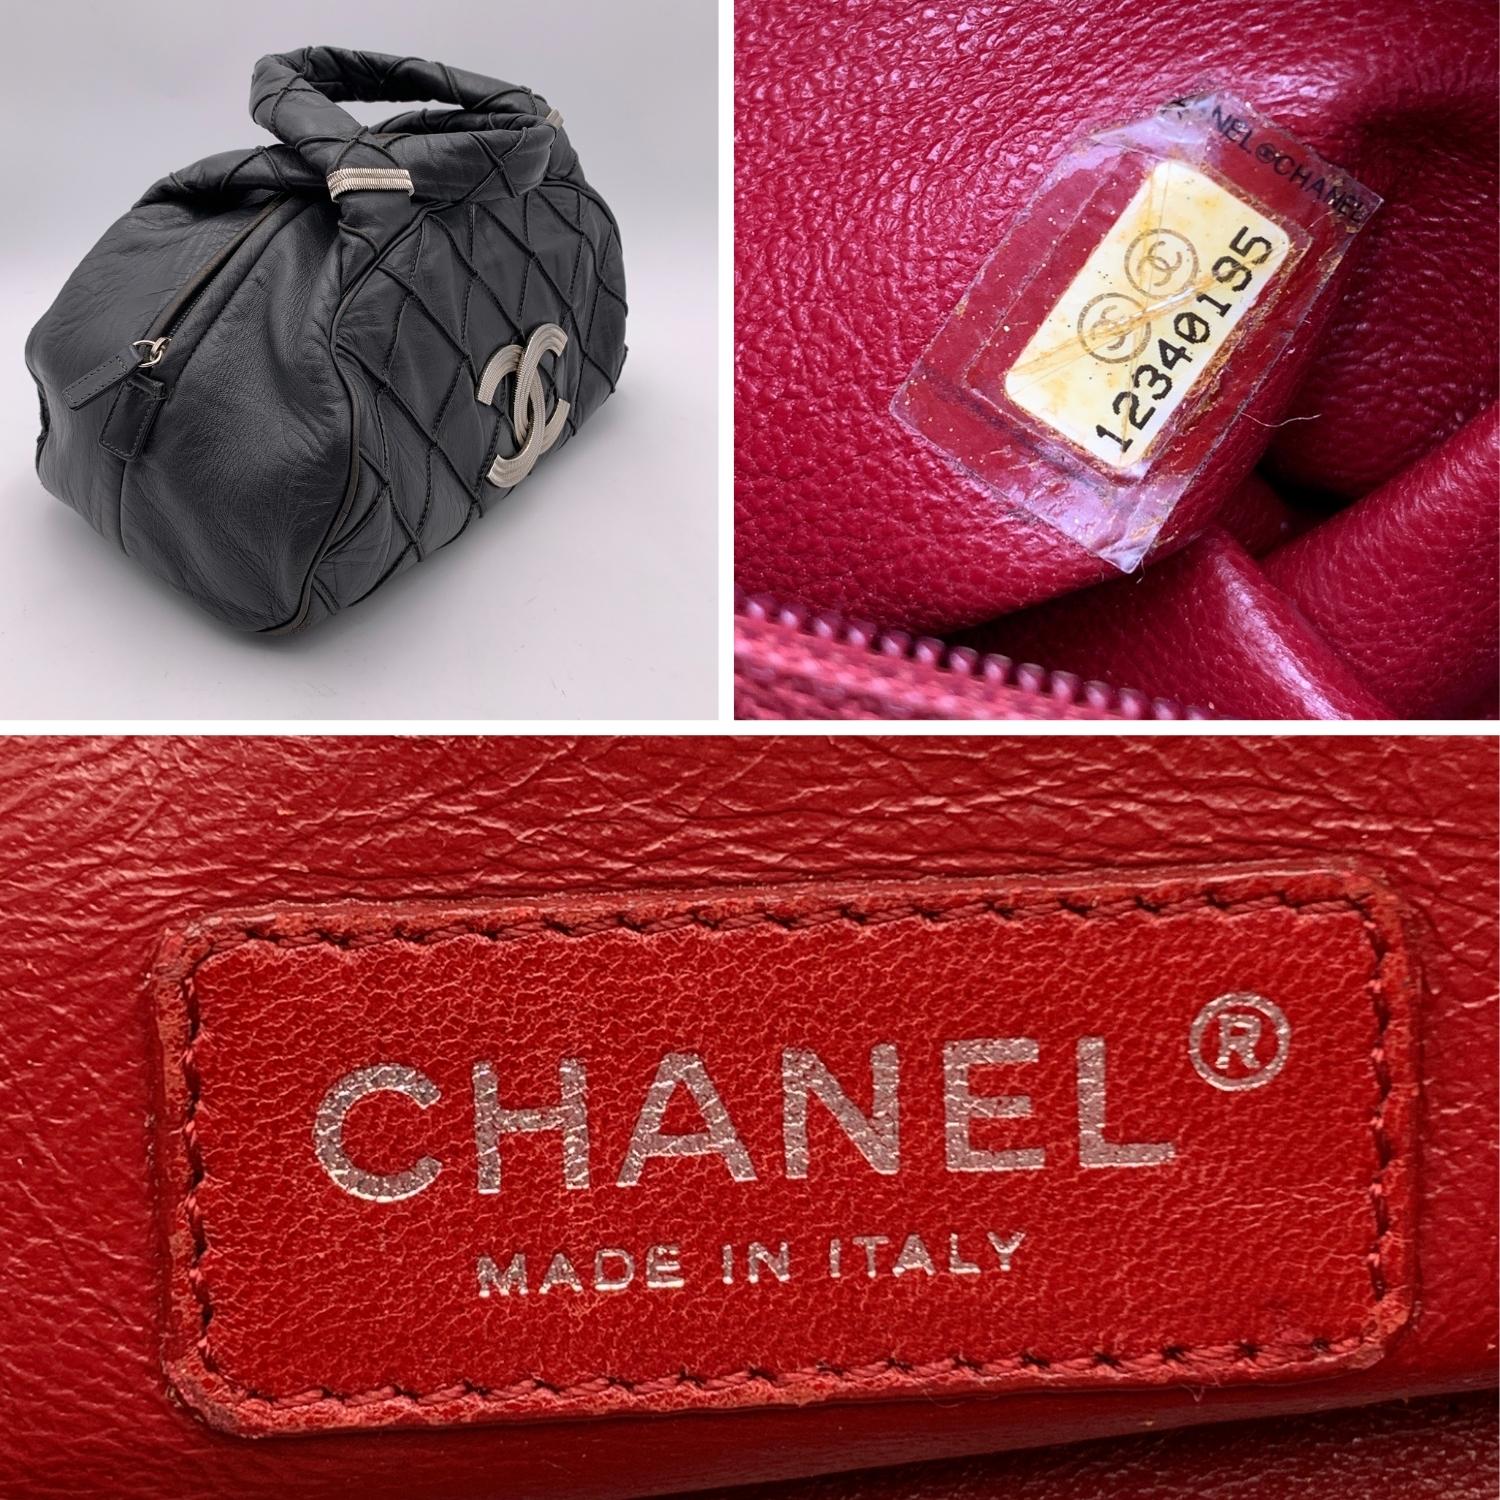 Chanel Quilted Bowler Bag - Grey Shoulder Bags, Handbags - CHA812645